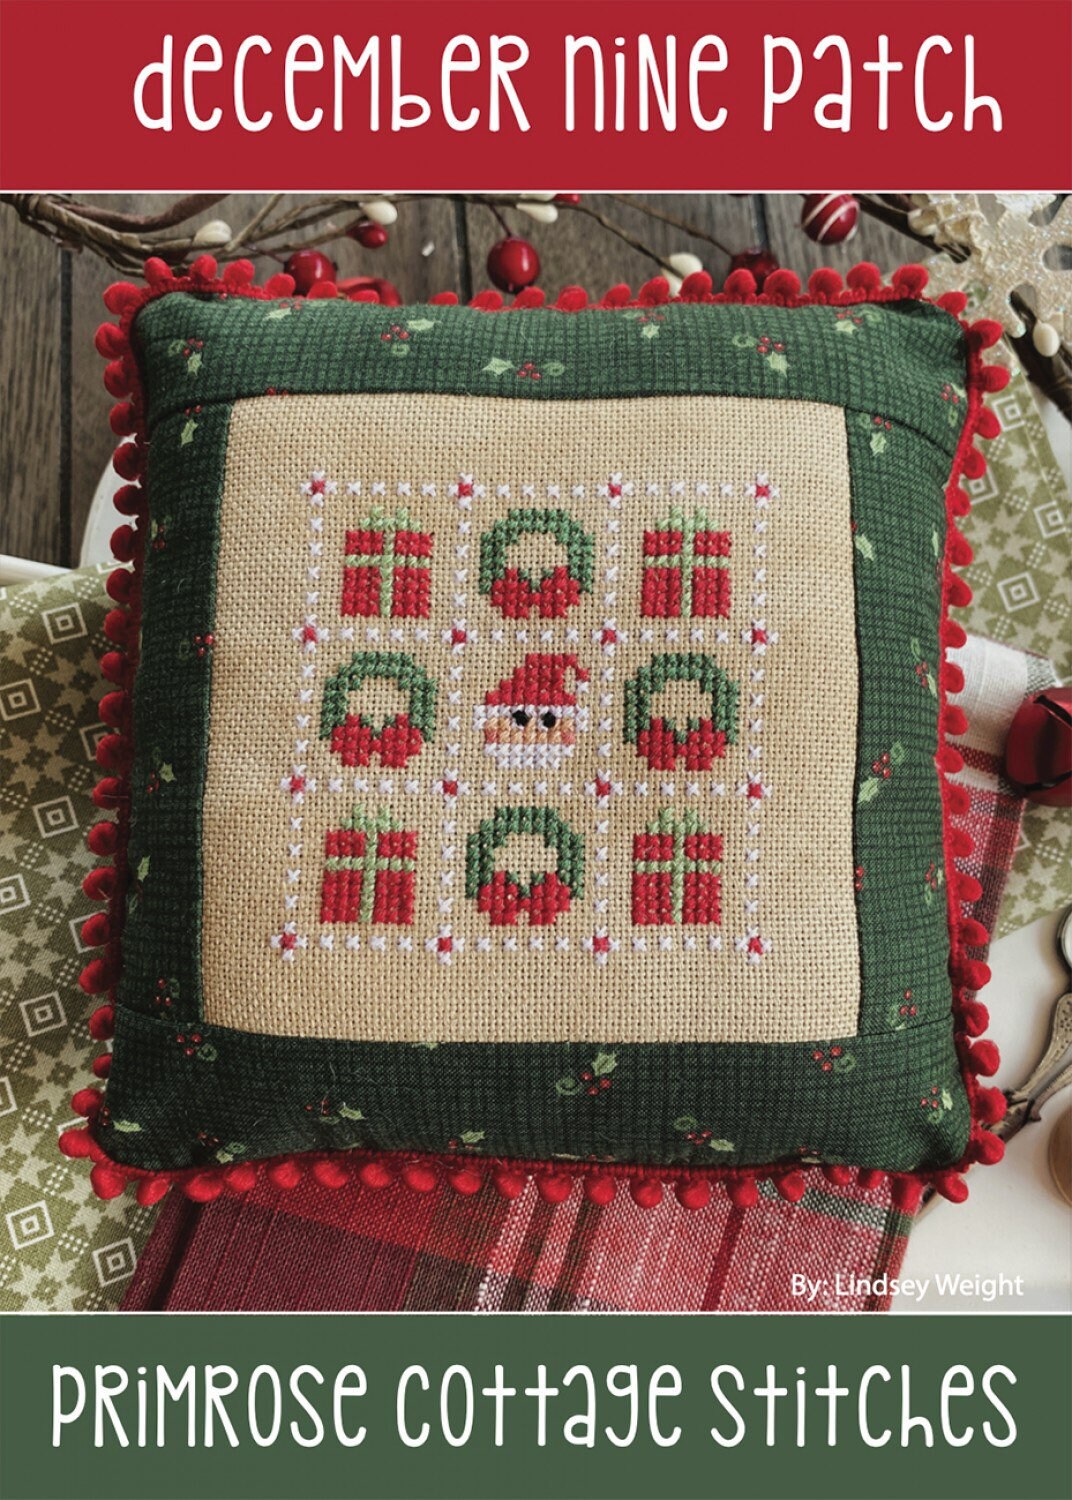 December Nine Patch Cross Stitch Pattern - Primrose Cottage Stitches - 39 x 39 stitches